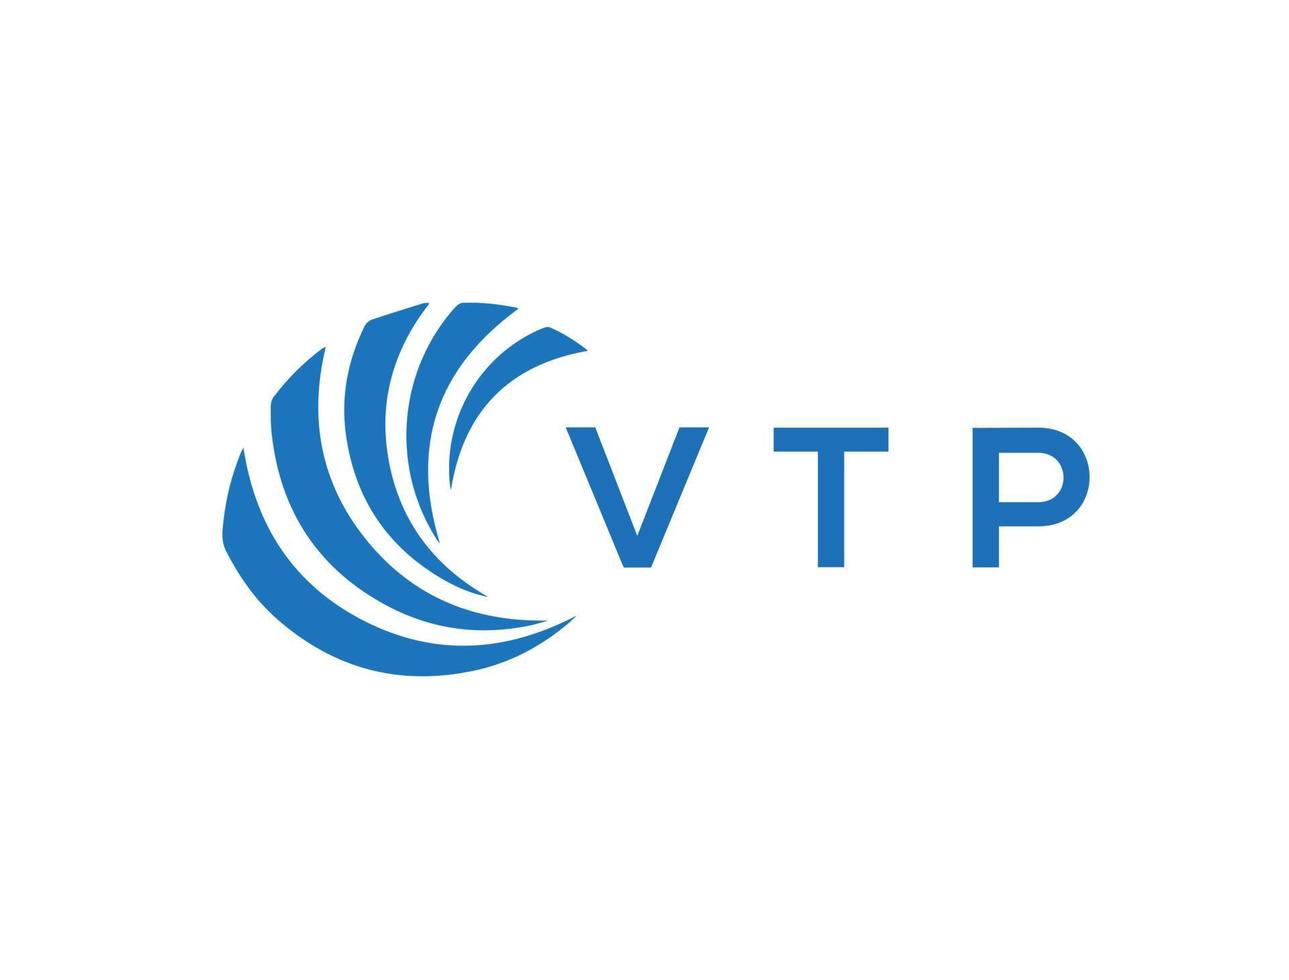 vtp letra logo diseño en blanco antecedentes. vtp creativo circulo letra logo concepto. vtp letra diseño. vector